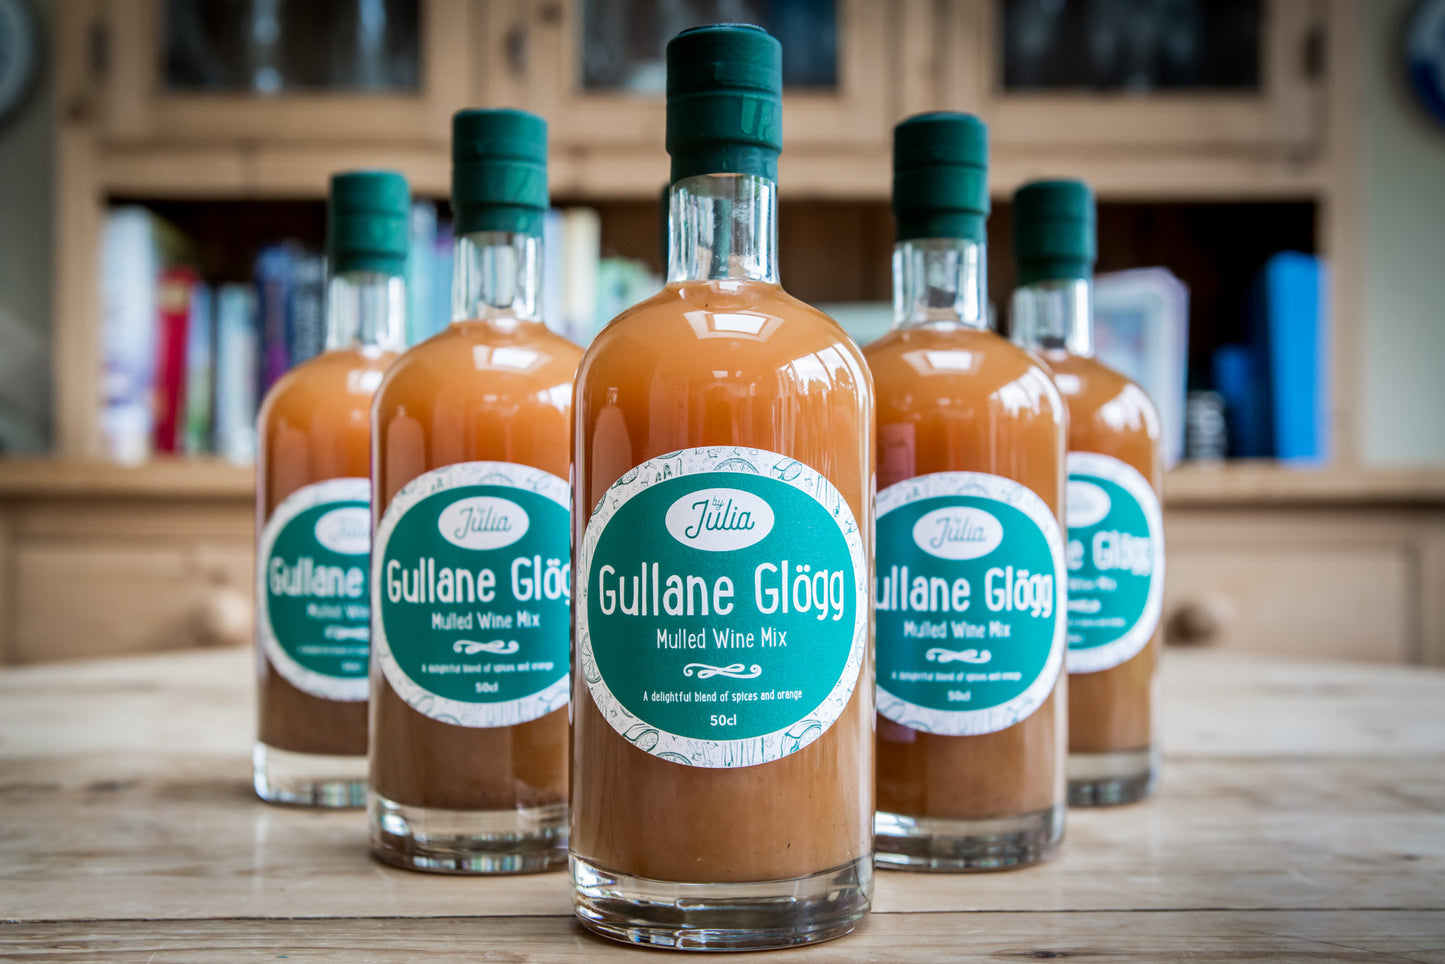 Gullane Glögg Mulled Wine Mix 5 bottles on table